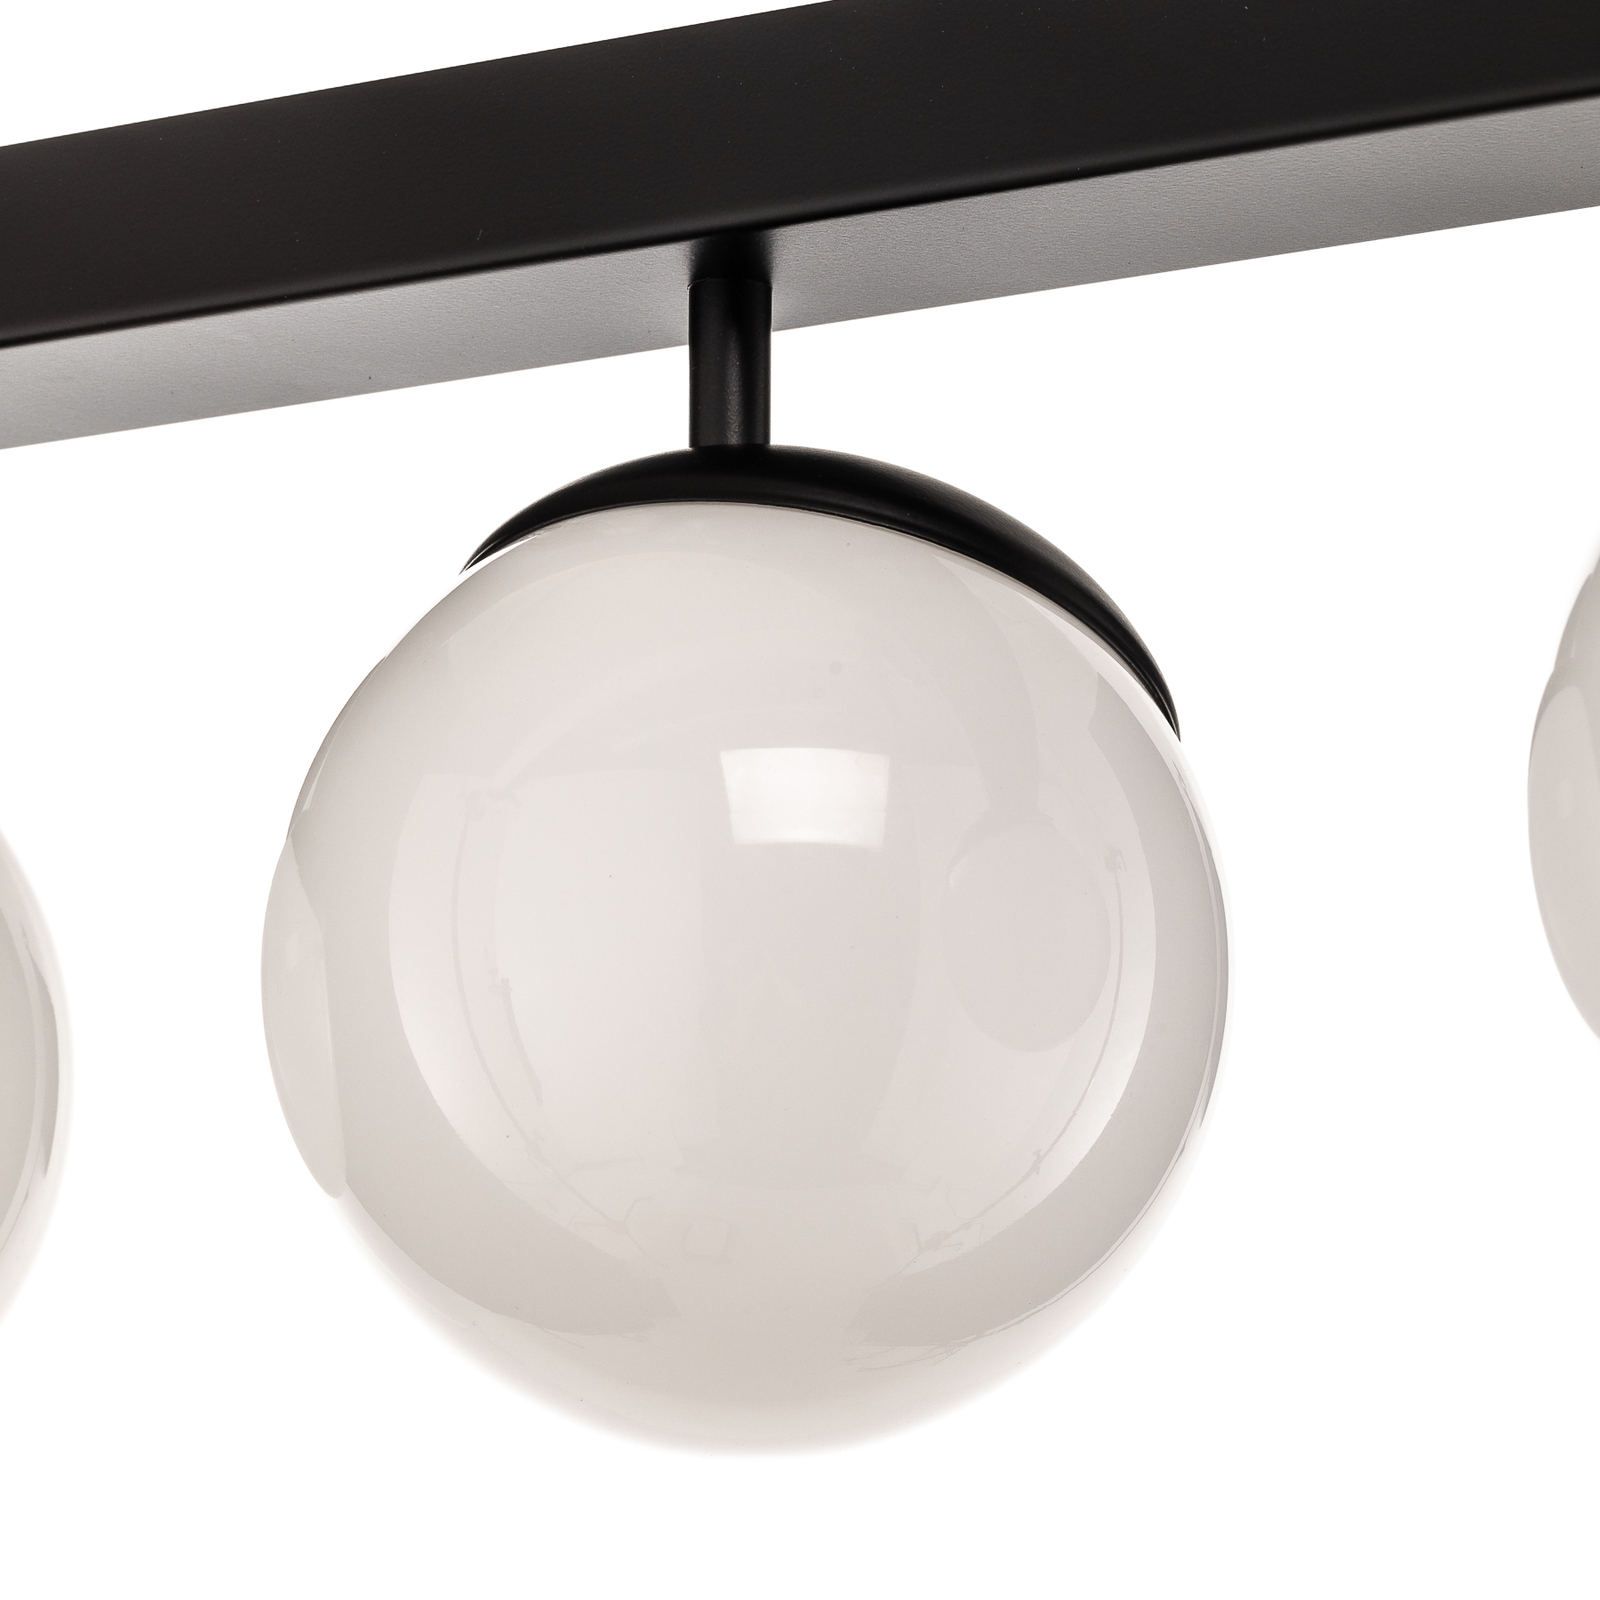 Sfera ceiling light 5-bulb direct glass/black